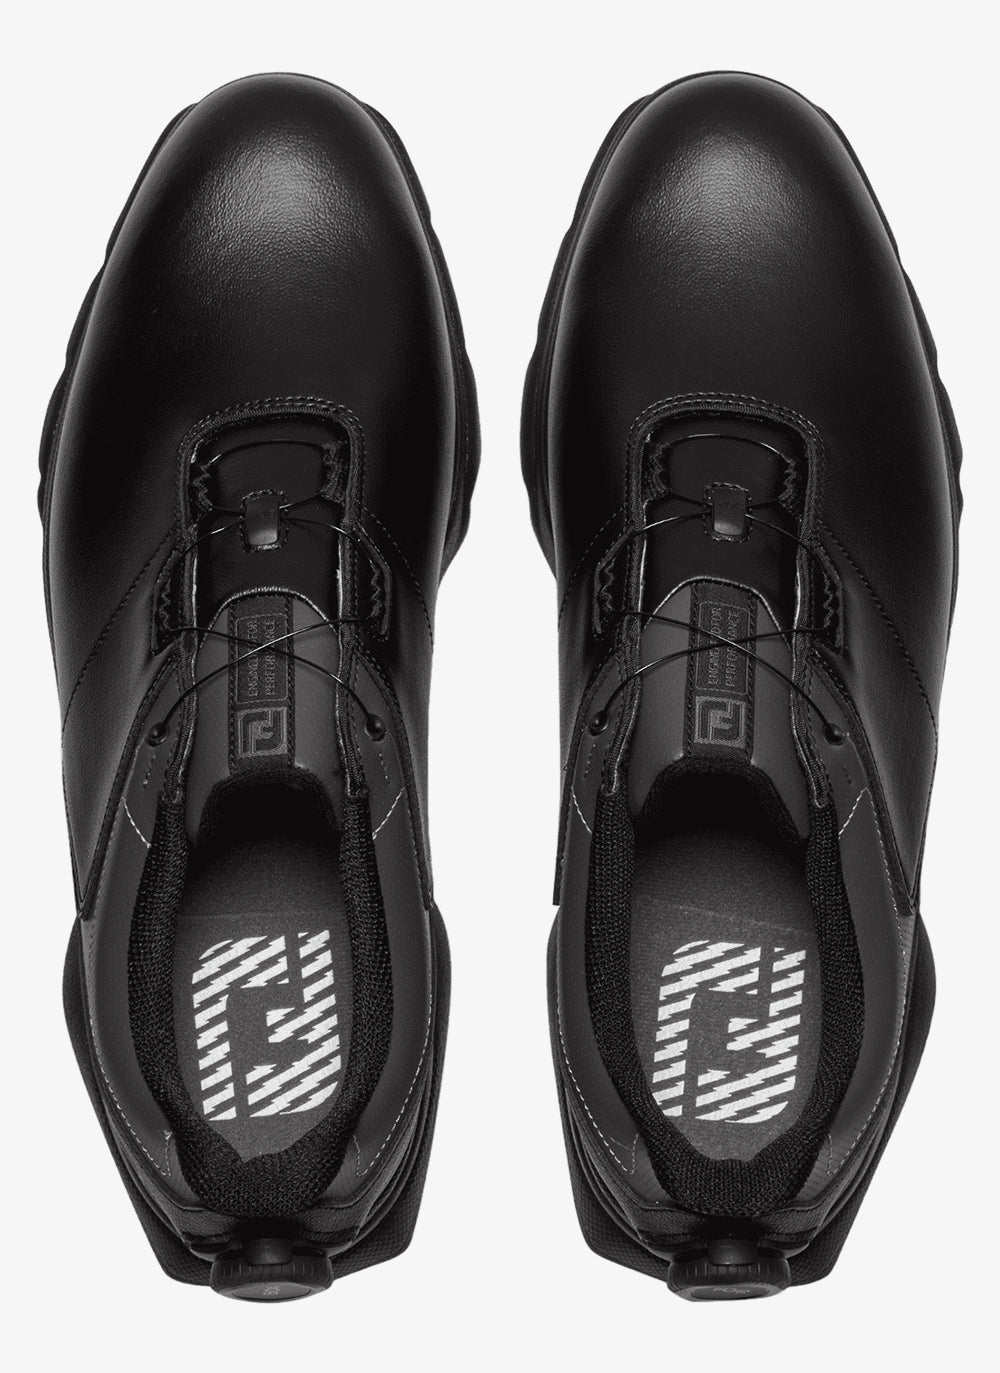 FootJoy UltraFit BOA Golf Shoes 54336